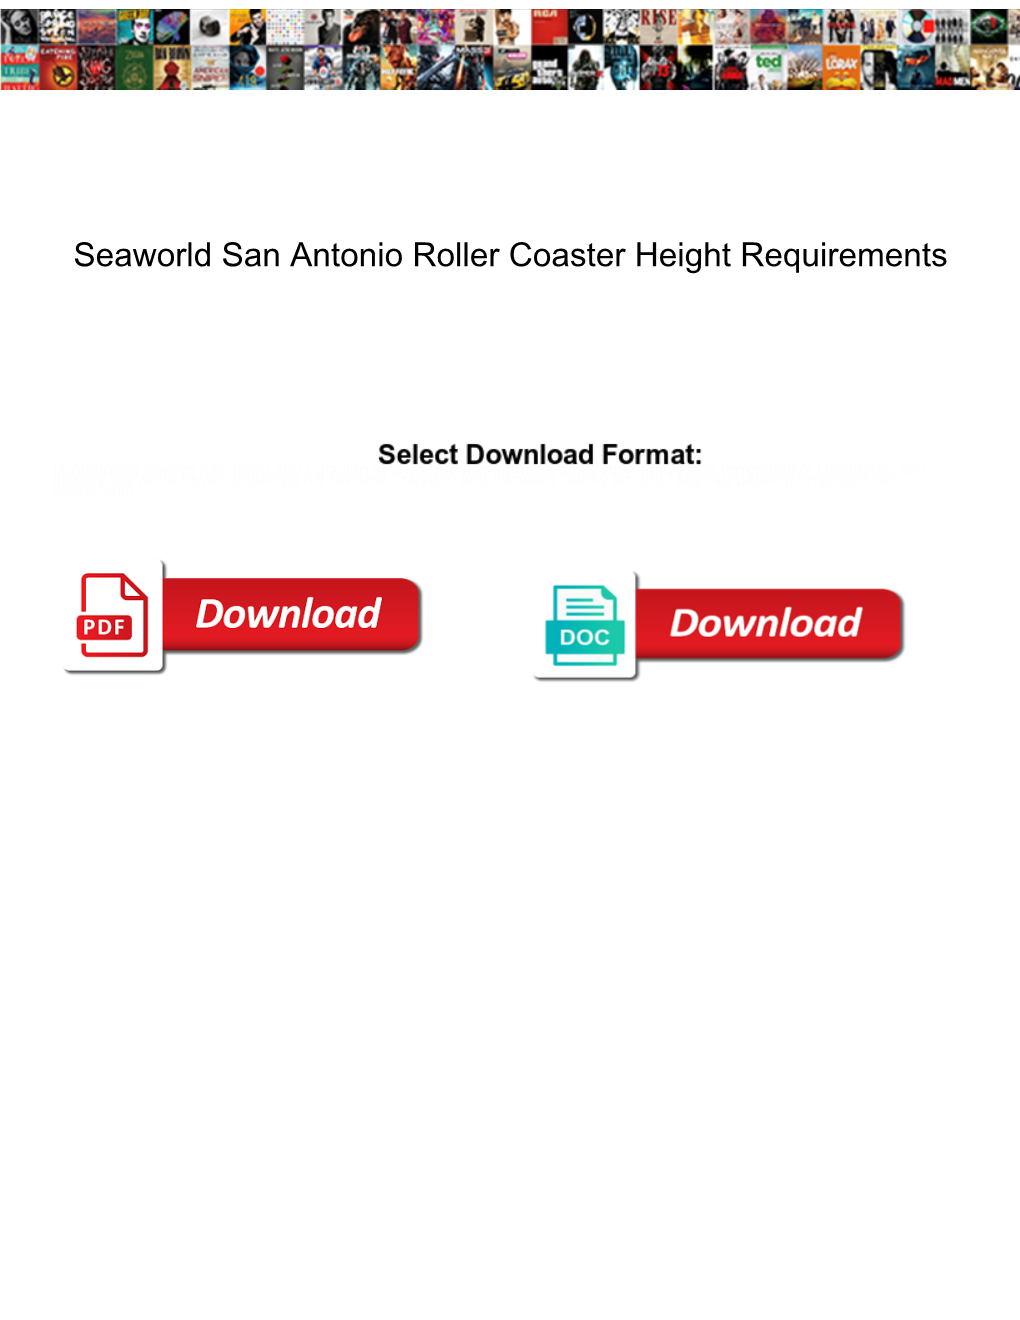 Seaworld San Antonio Roller Coaster Height Requirements